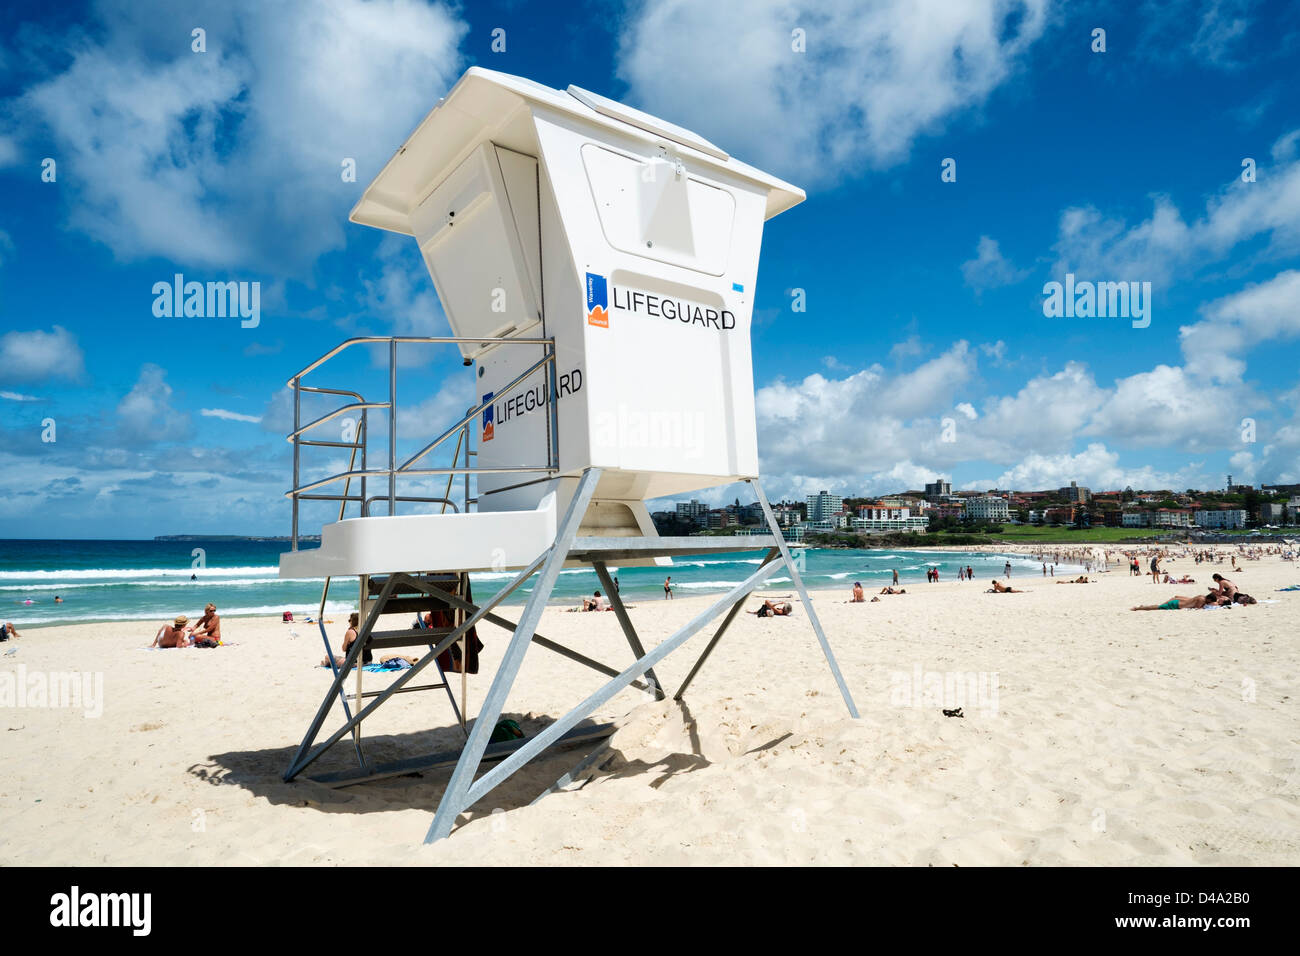 Lifeguard box on Bondi Beach in Sydney New South Wales in Australia Stock Photo